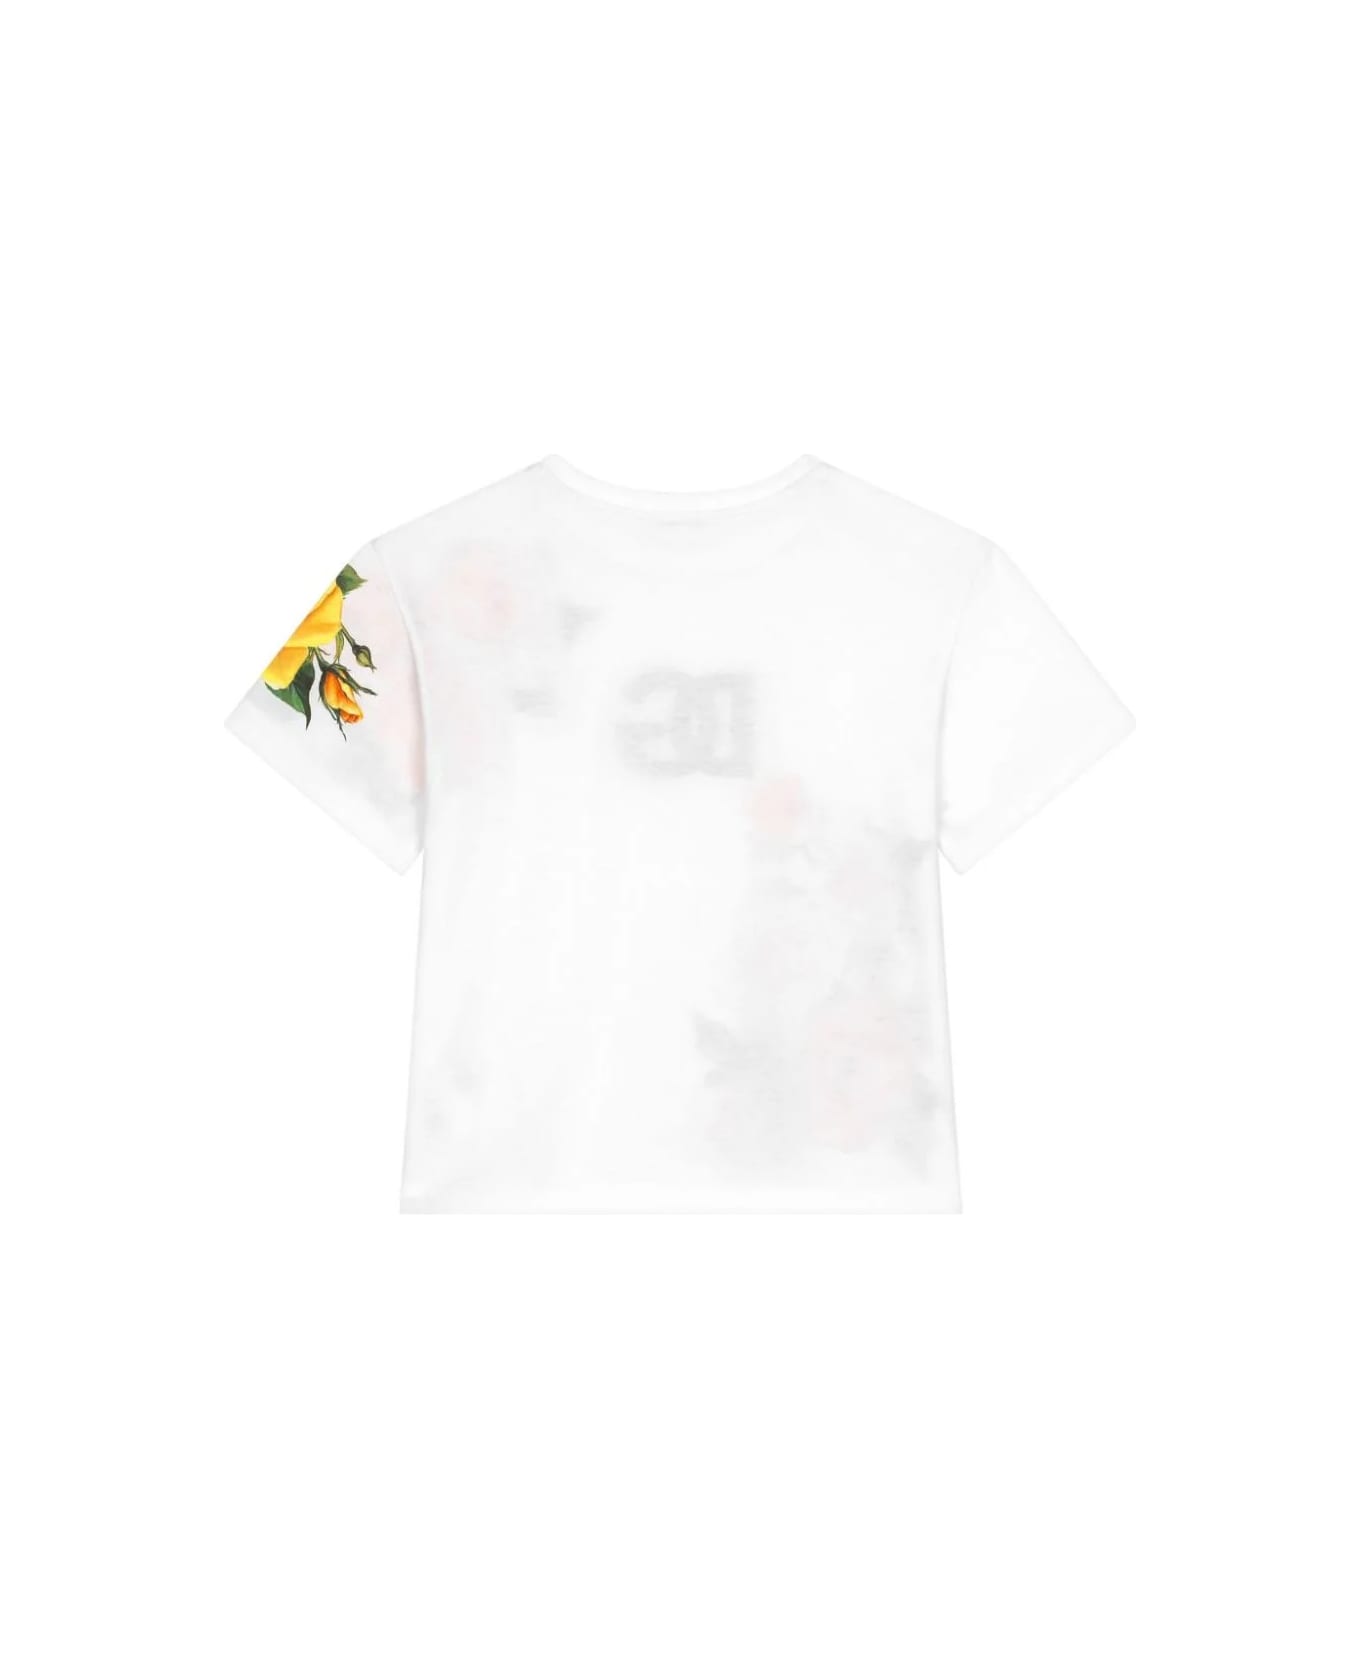 Dolce & Gabbana T-shirt With Dg Logo And Yellow Rose Print - Bianco